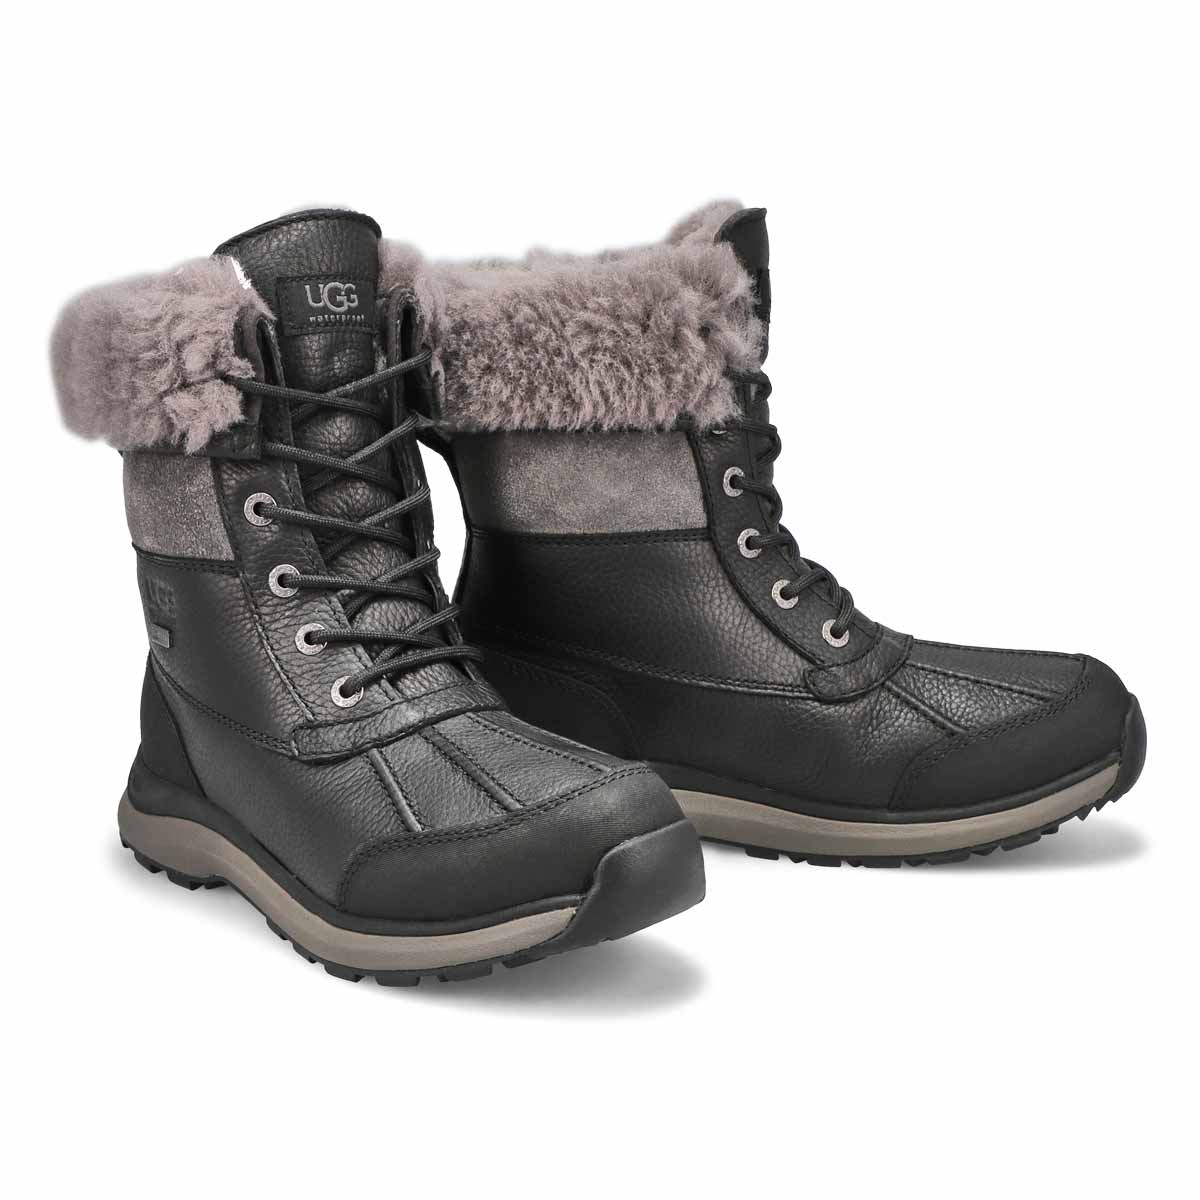 Women's Adirondack III Winter Boot - Black